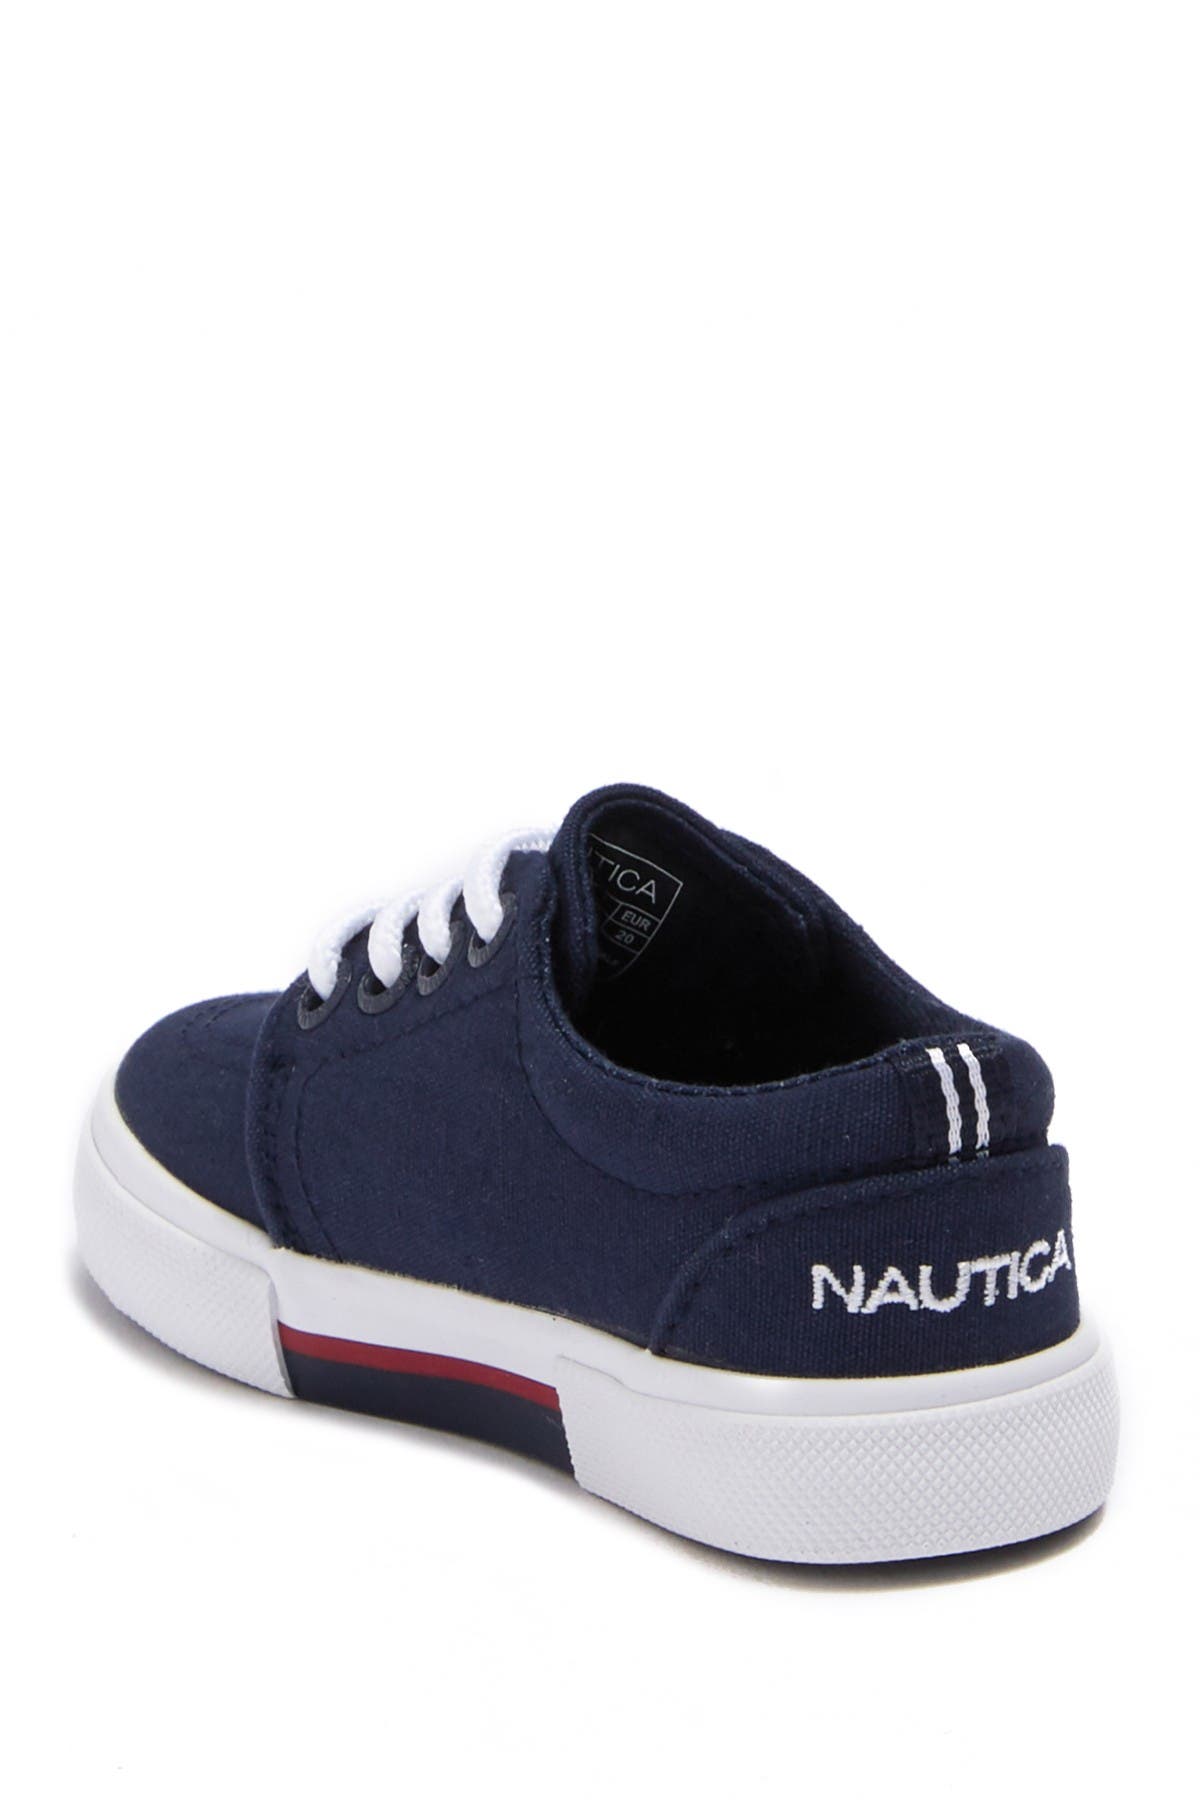 nautica blue and white shoes